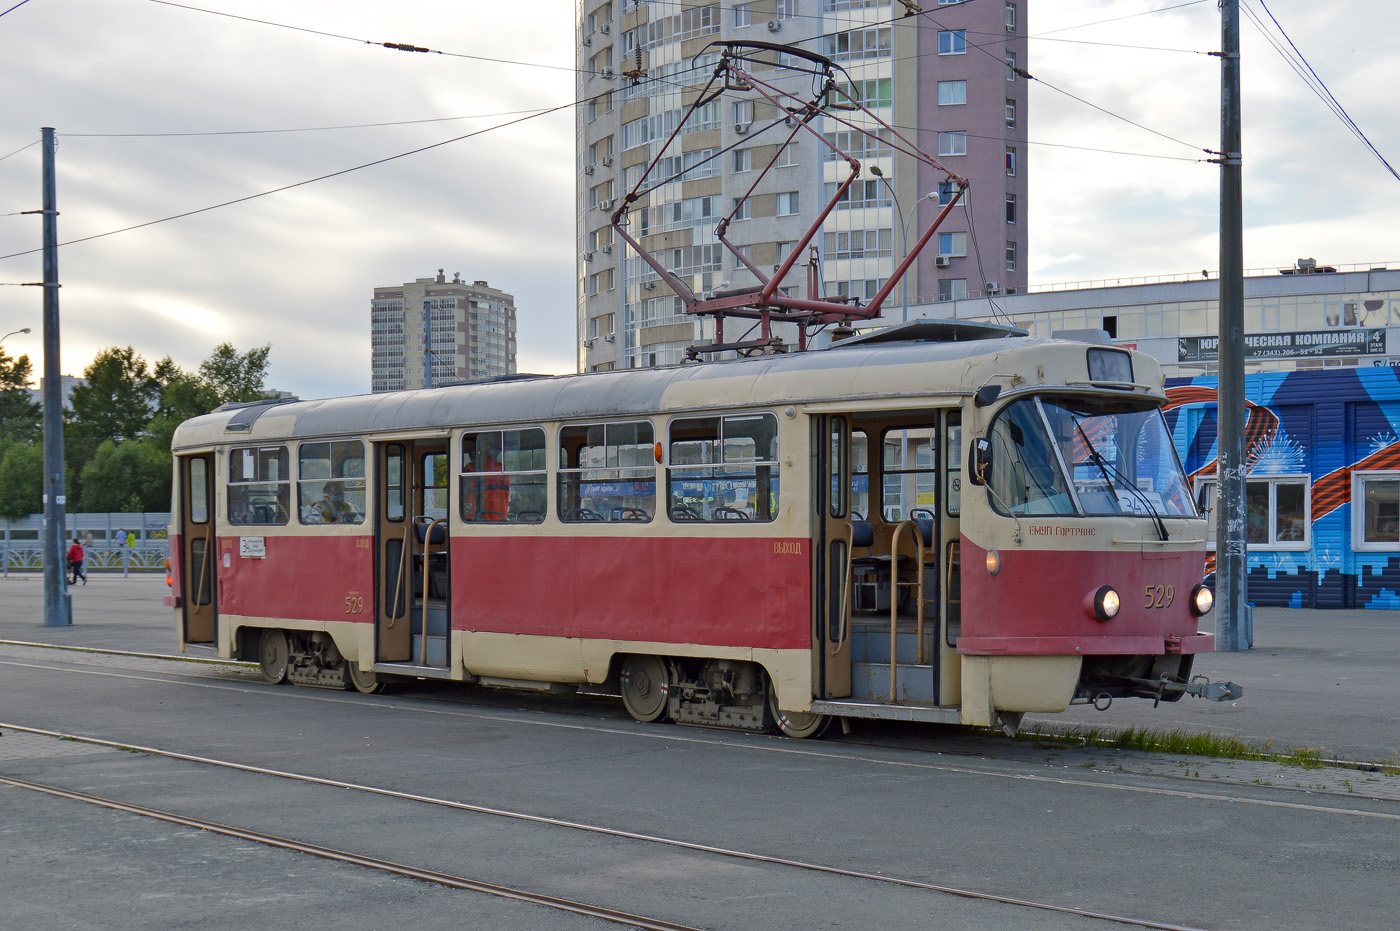 Yekaterinburg, Tatra T3SU (2-door) # 529